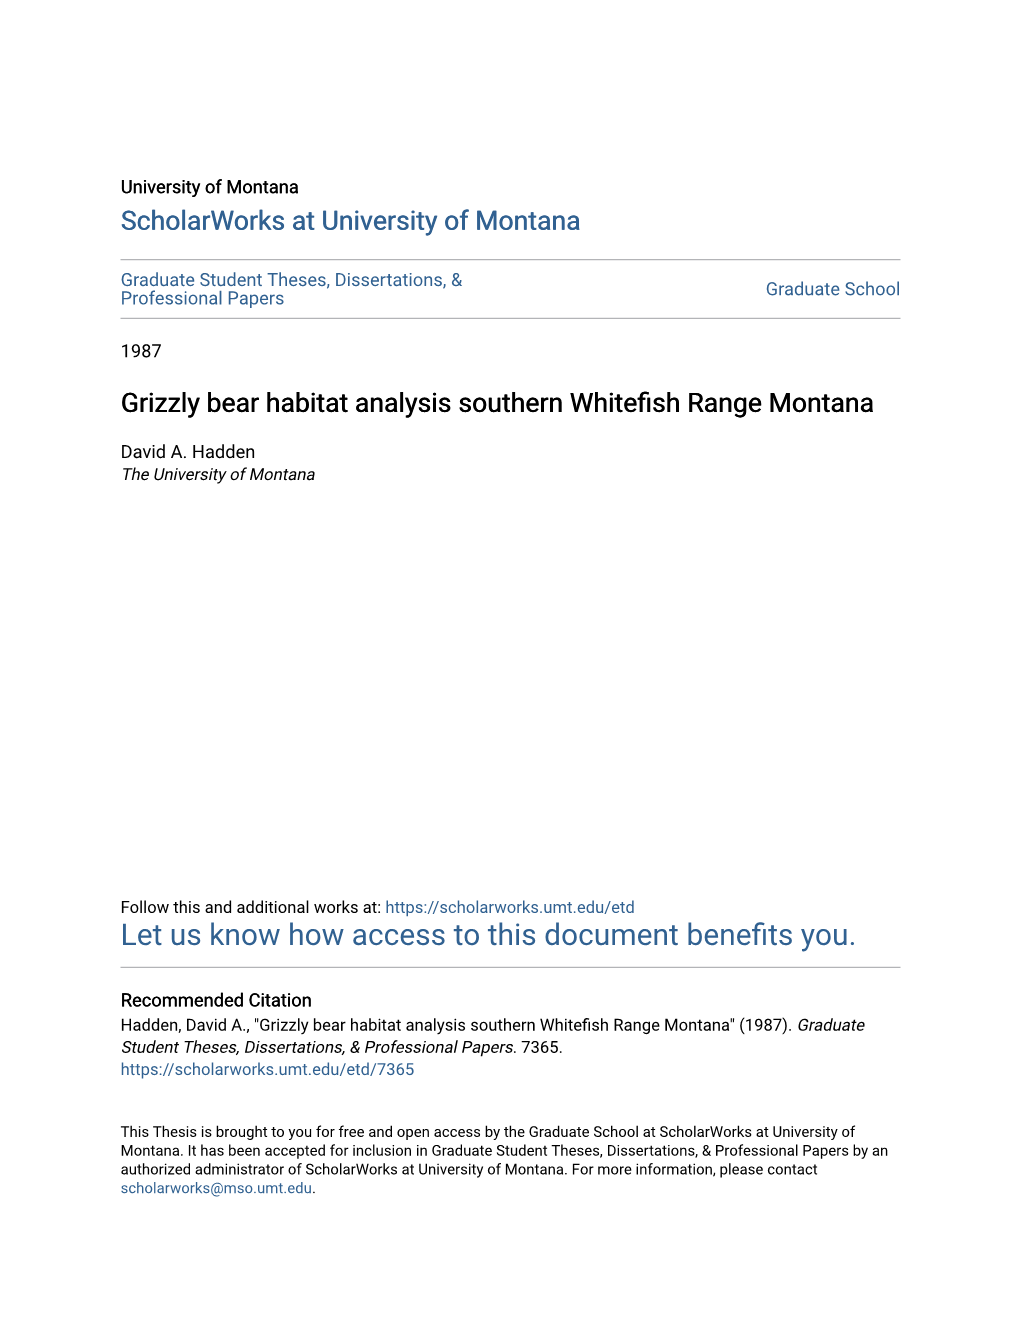 Grizzly Bear Habitat Analysis Southern Whitefish Range Montana